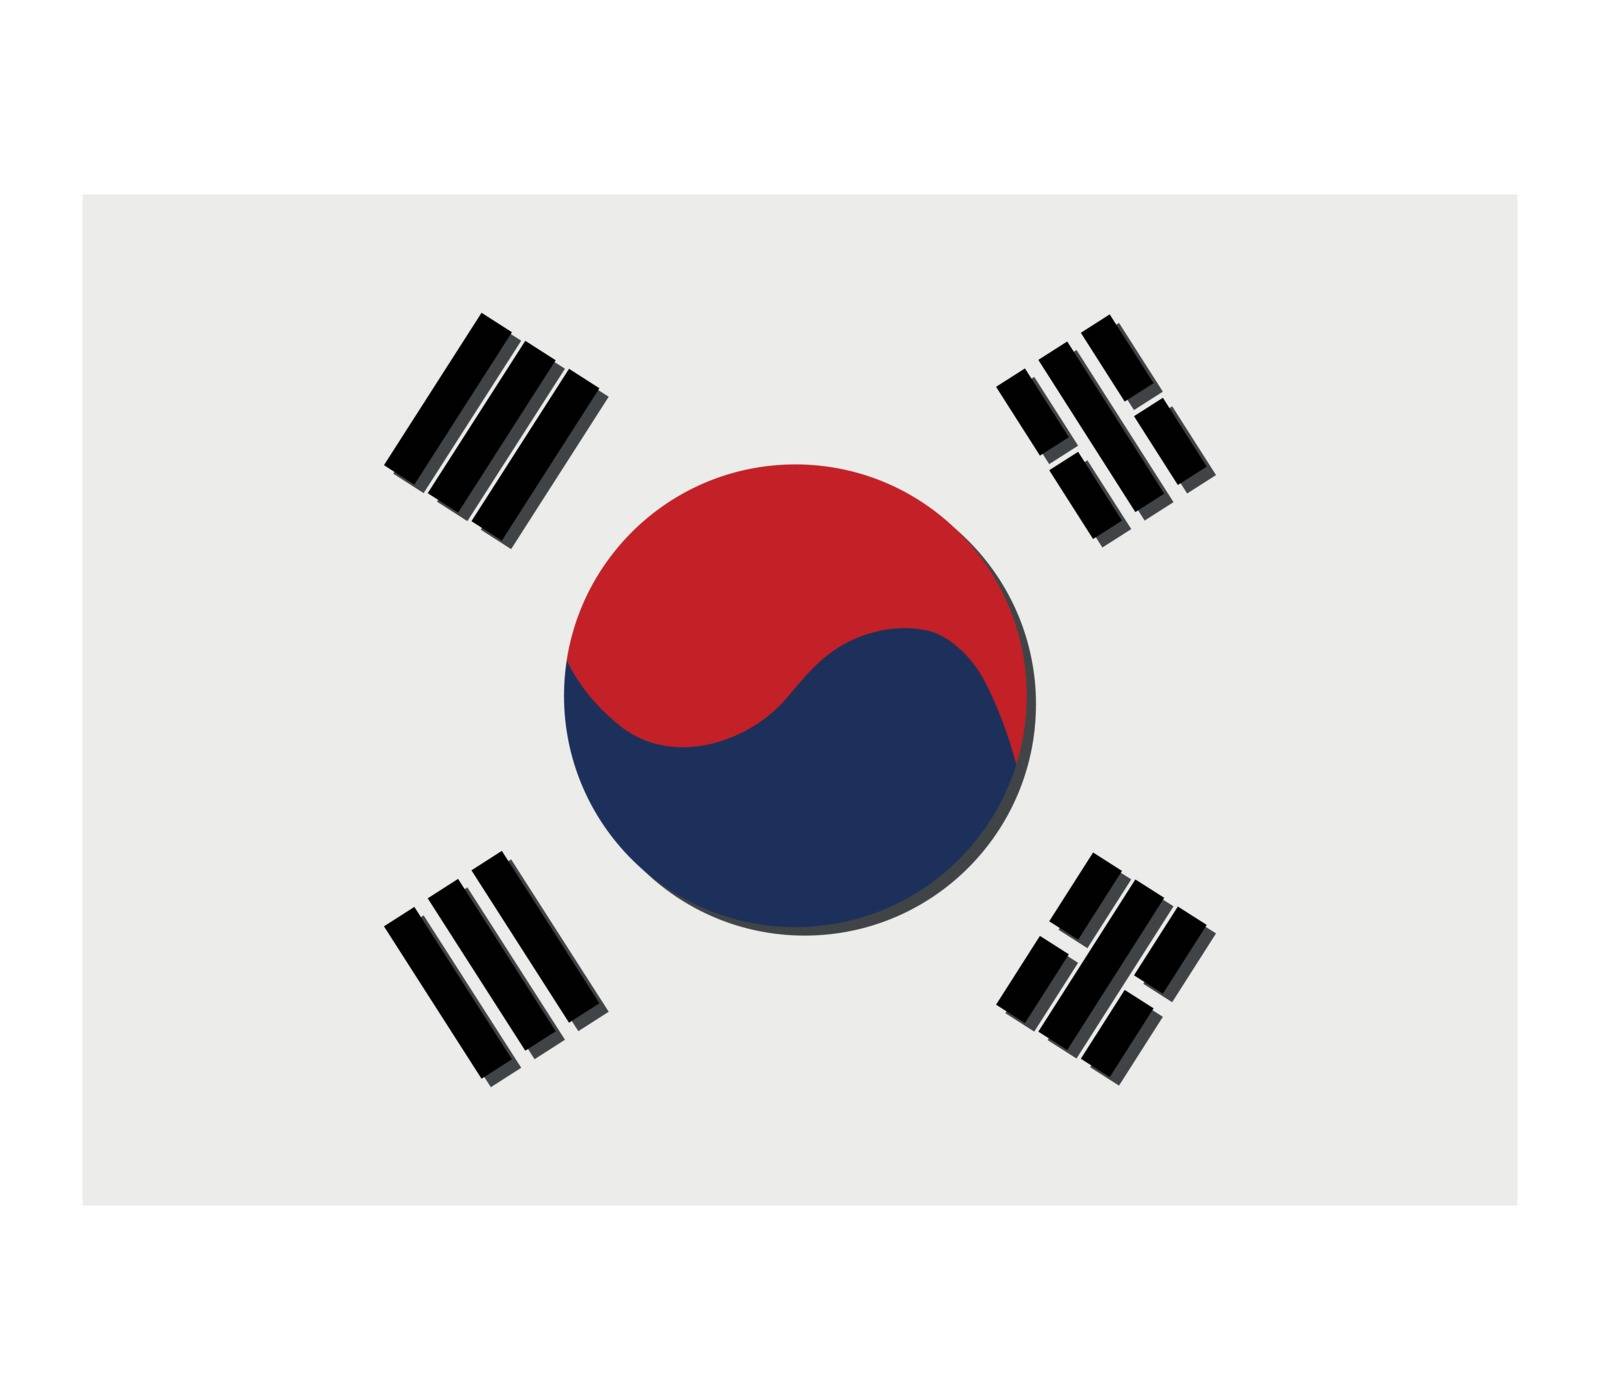 south korea flag by Mark1987